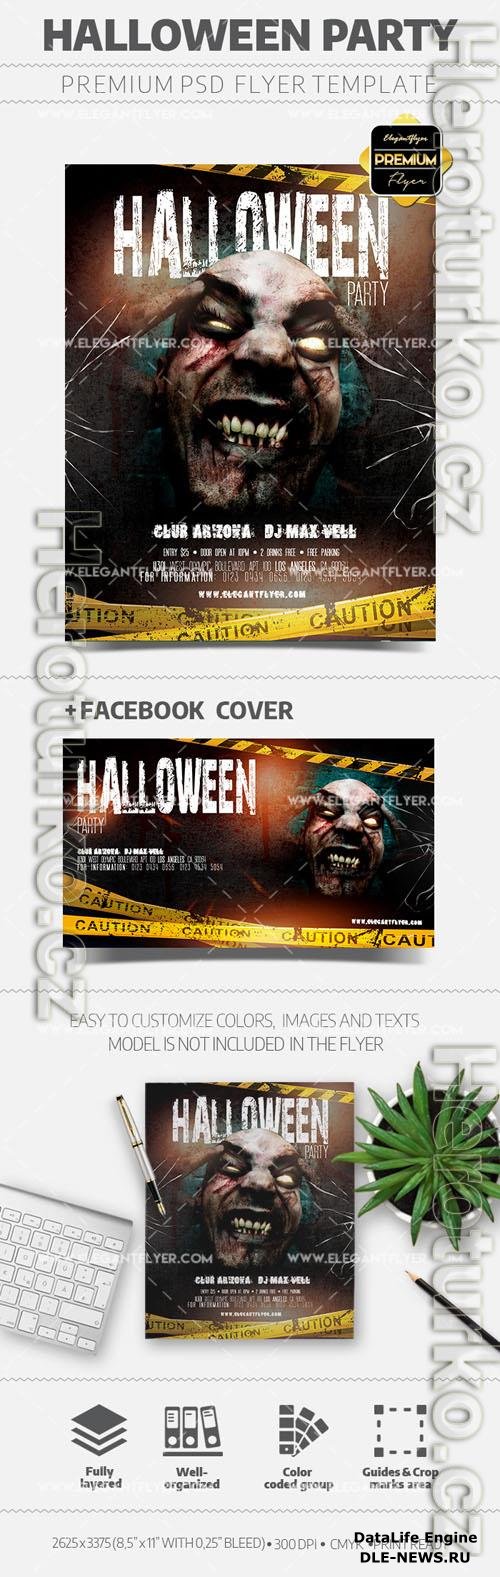 Halloween Party Flyer PSD Template vol 3